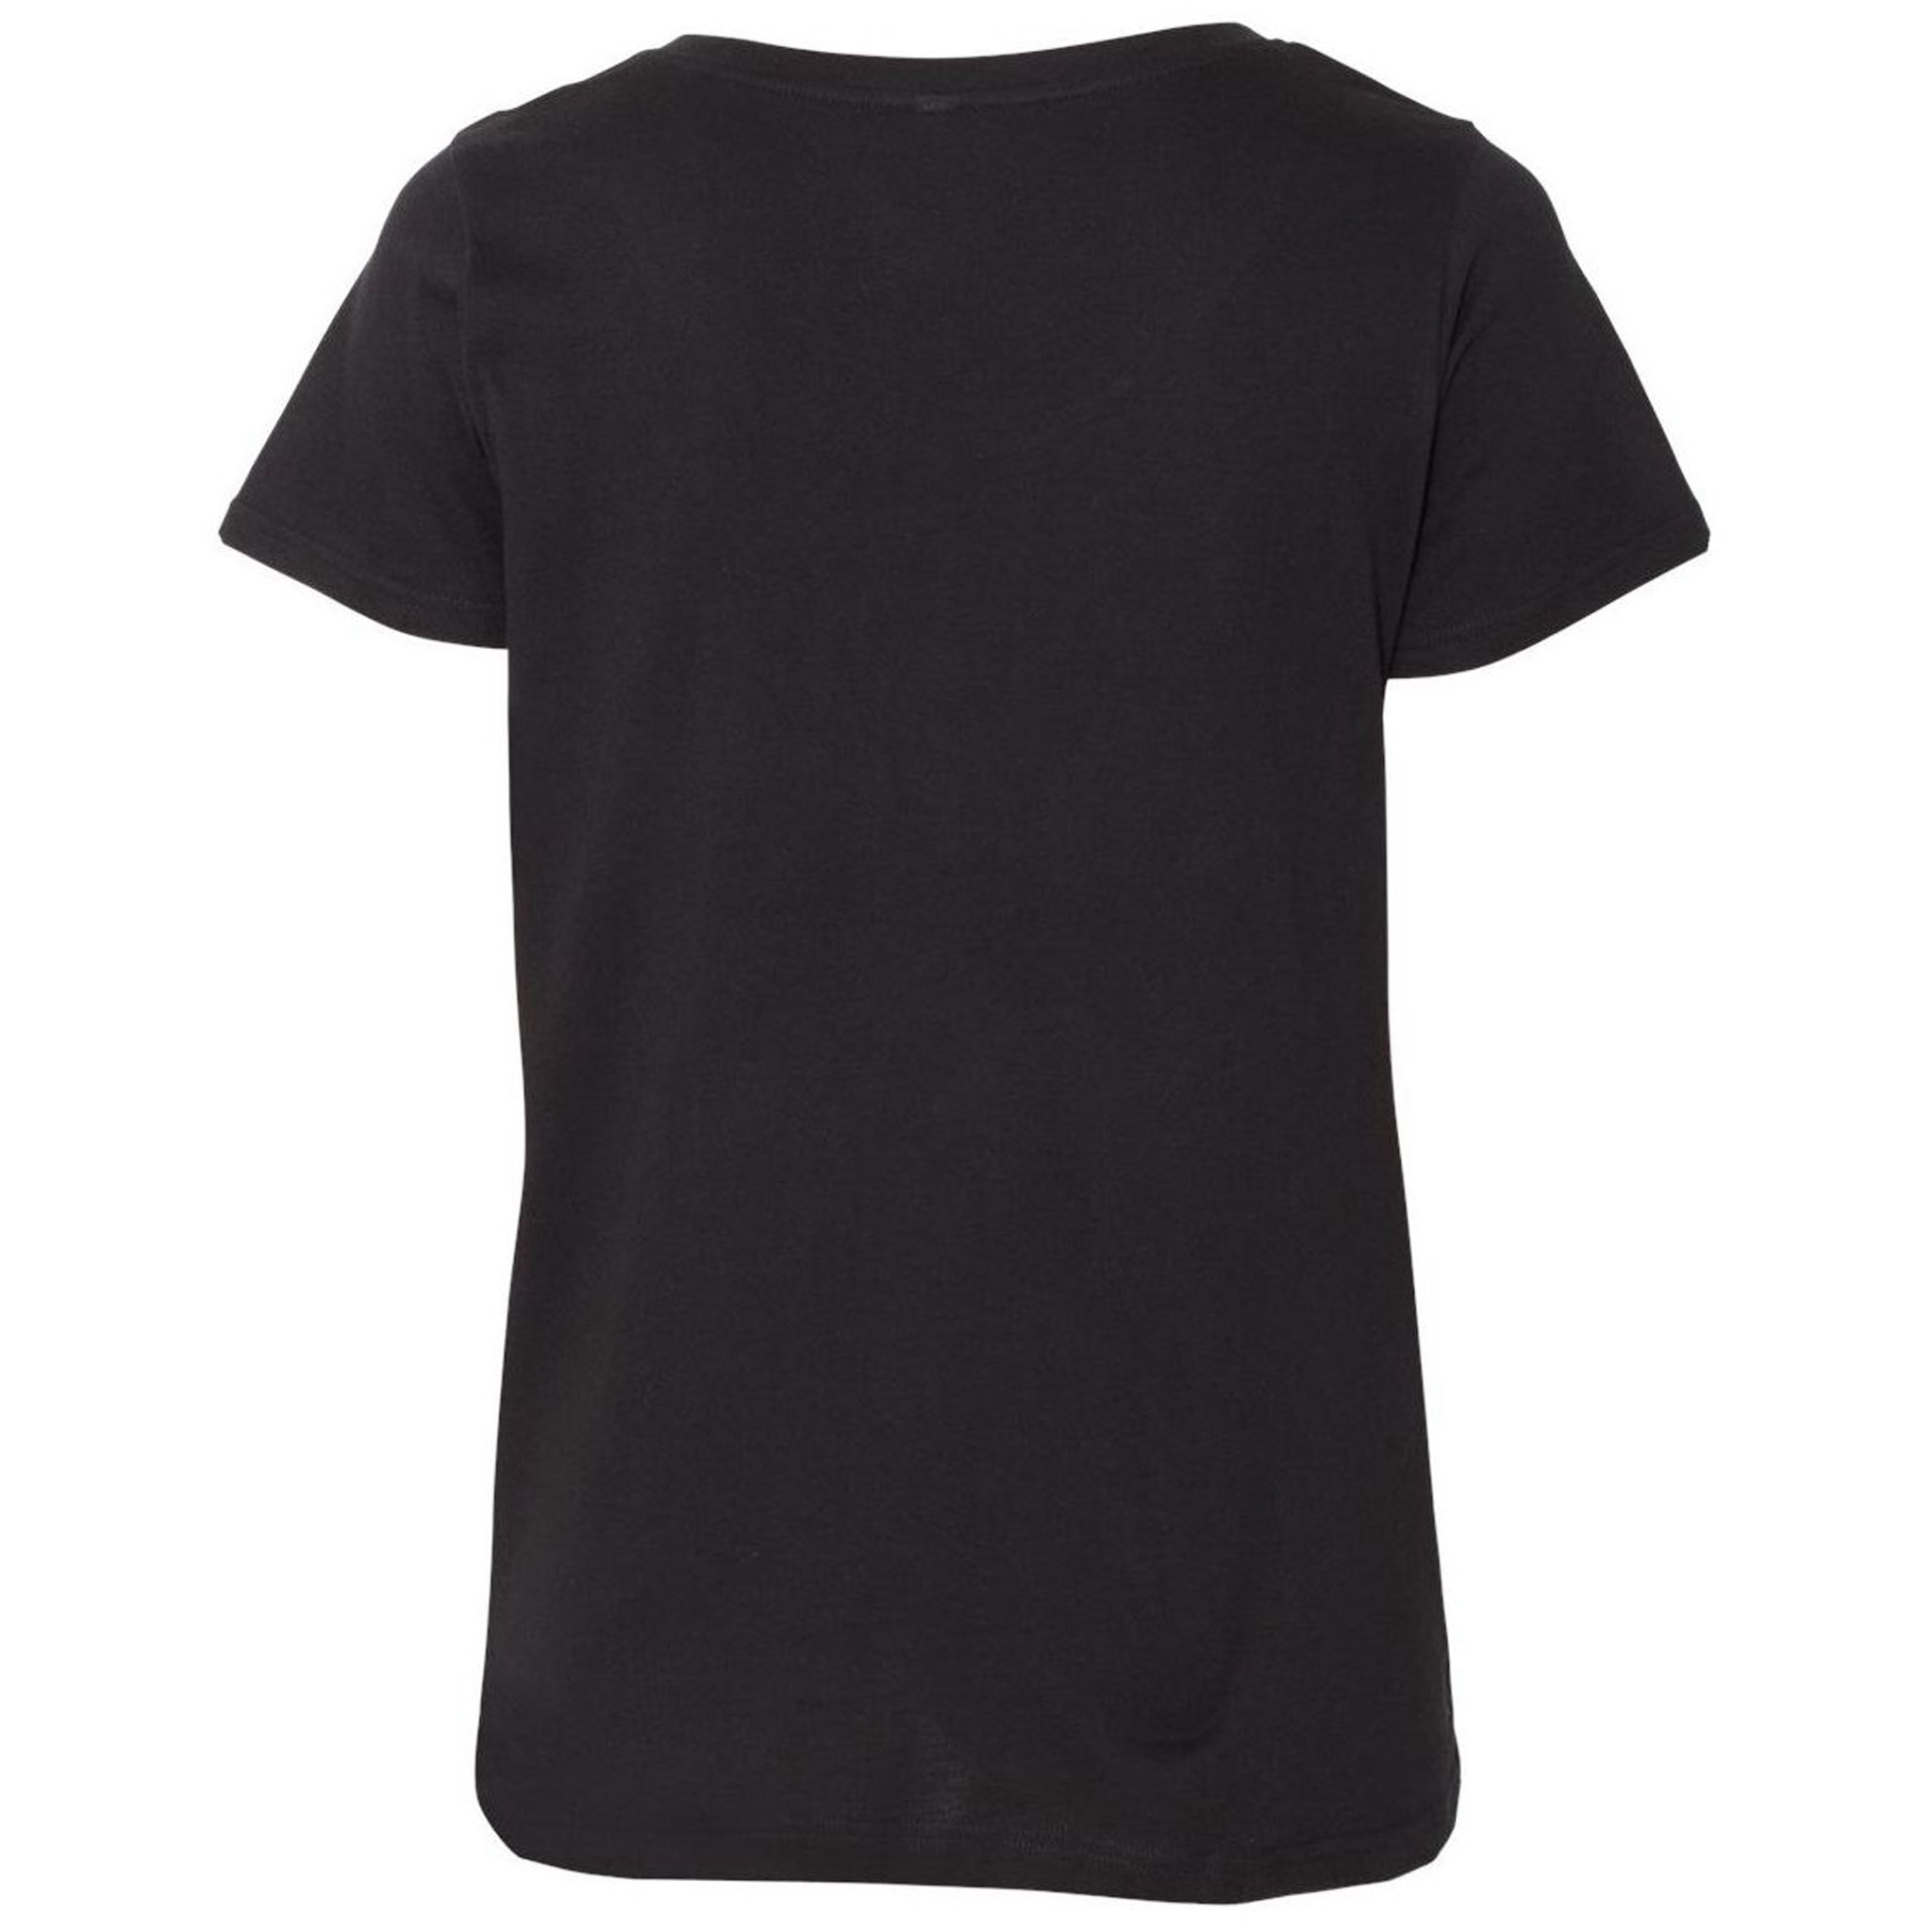 Walleye Combination Women's Plus Size T-Shirt